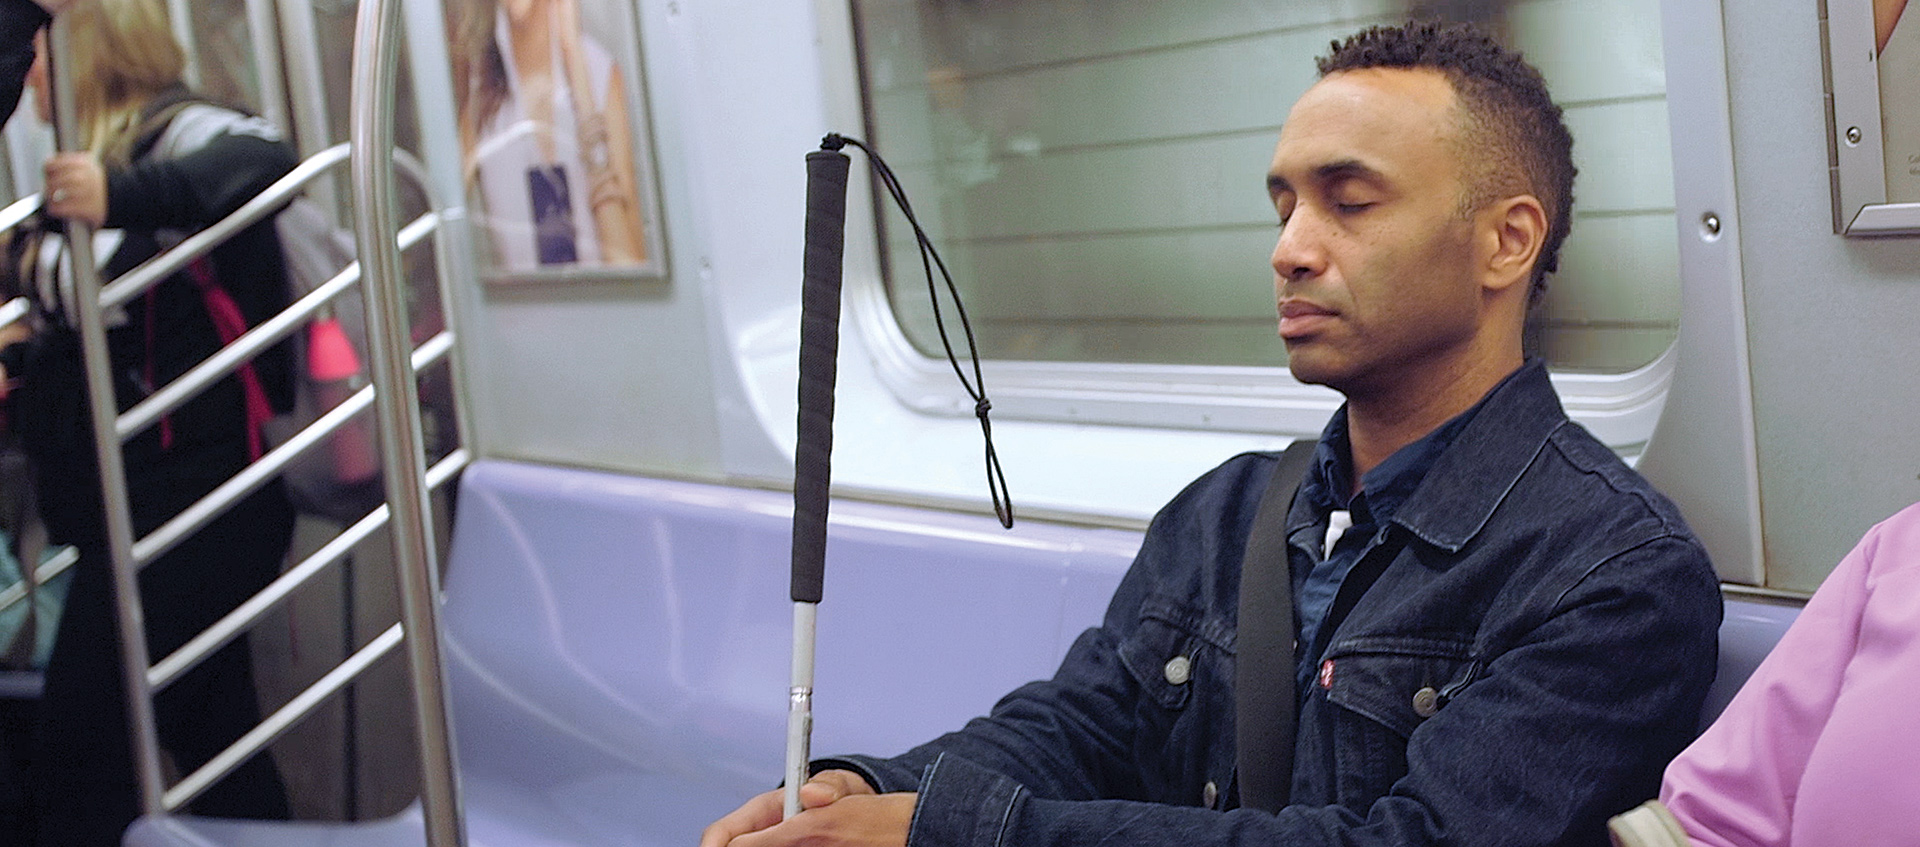 Man holding cane, sitting on train